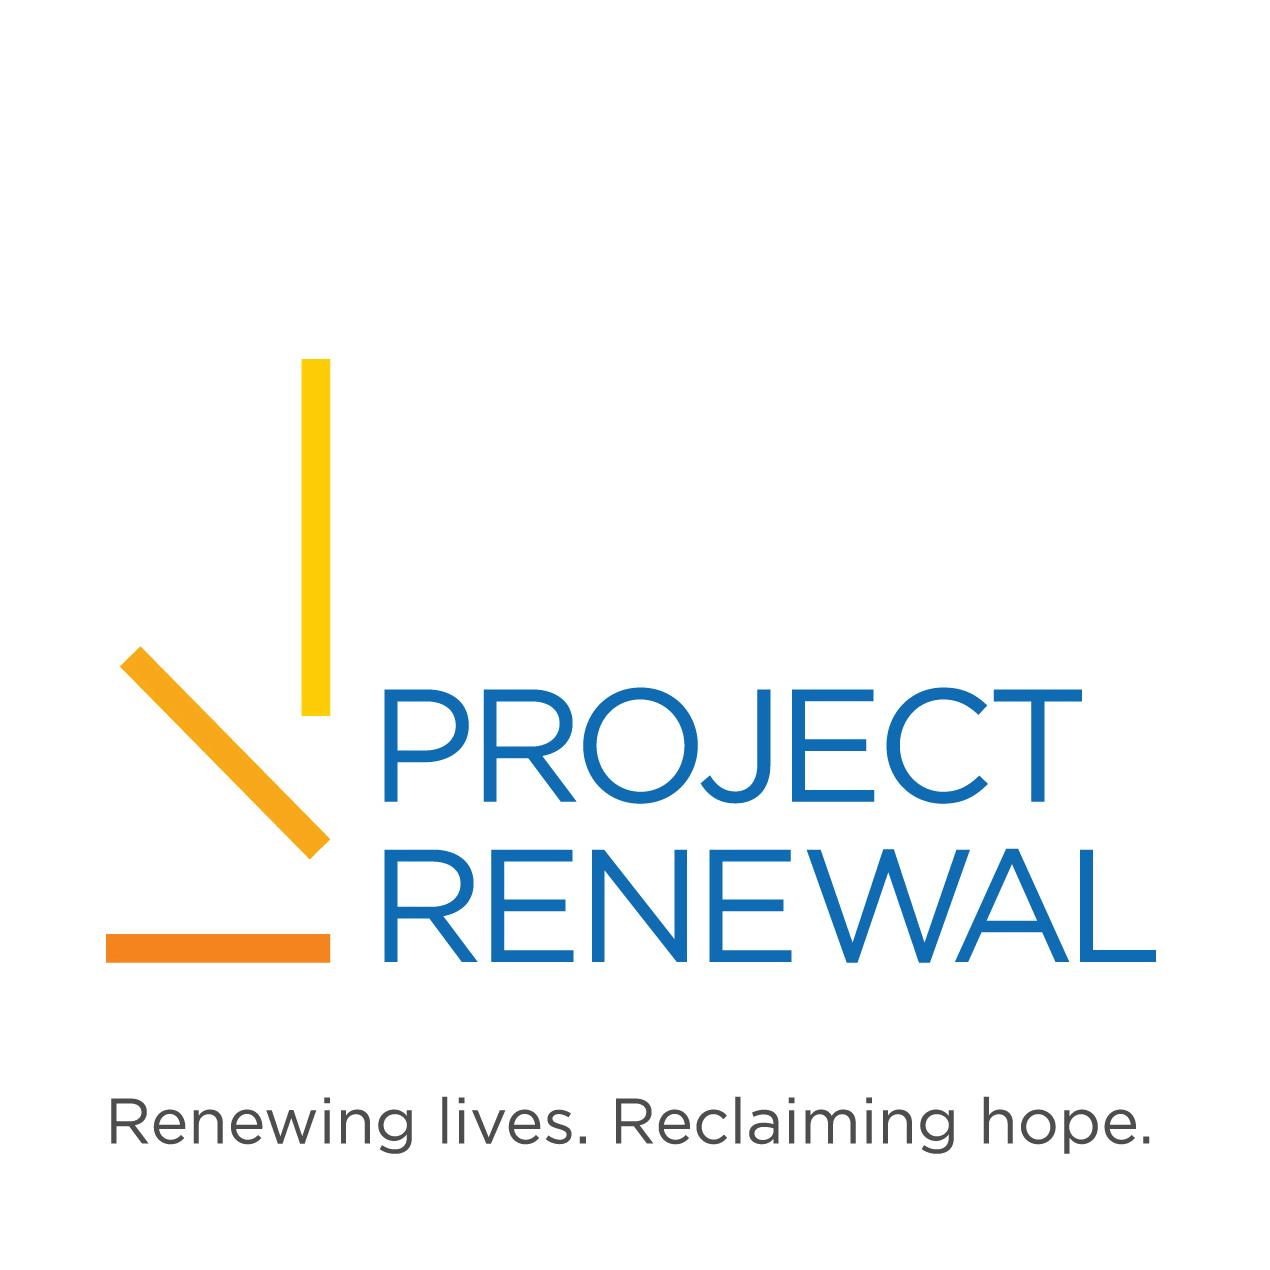 Project Renewal